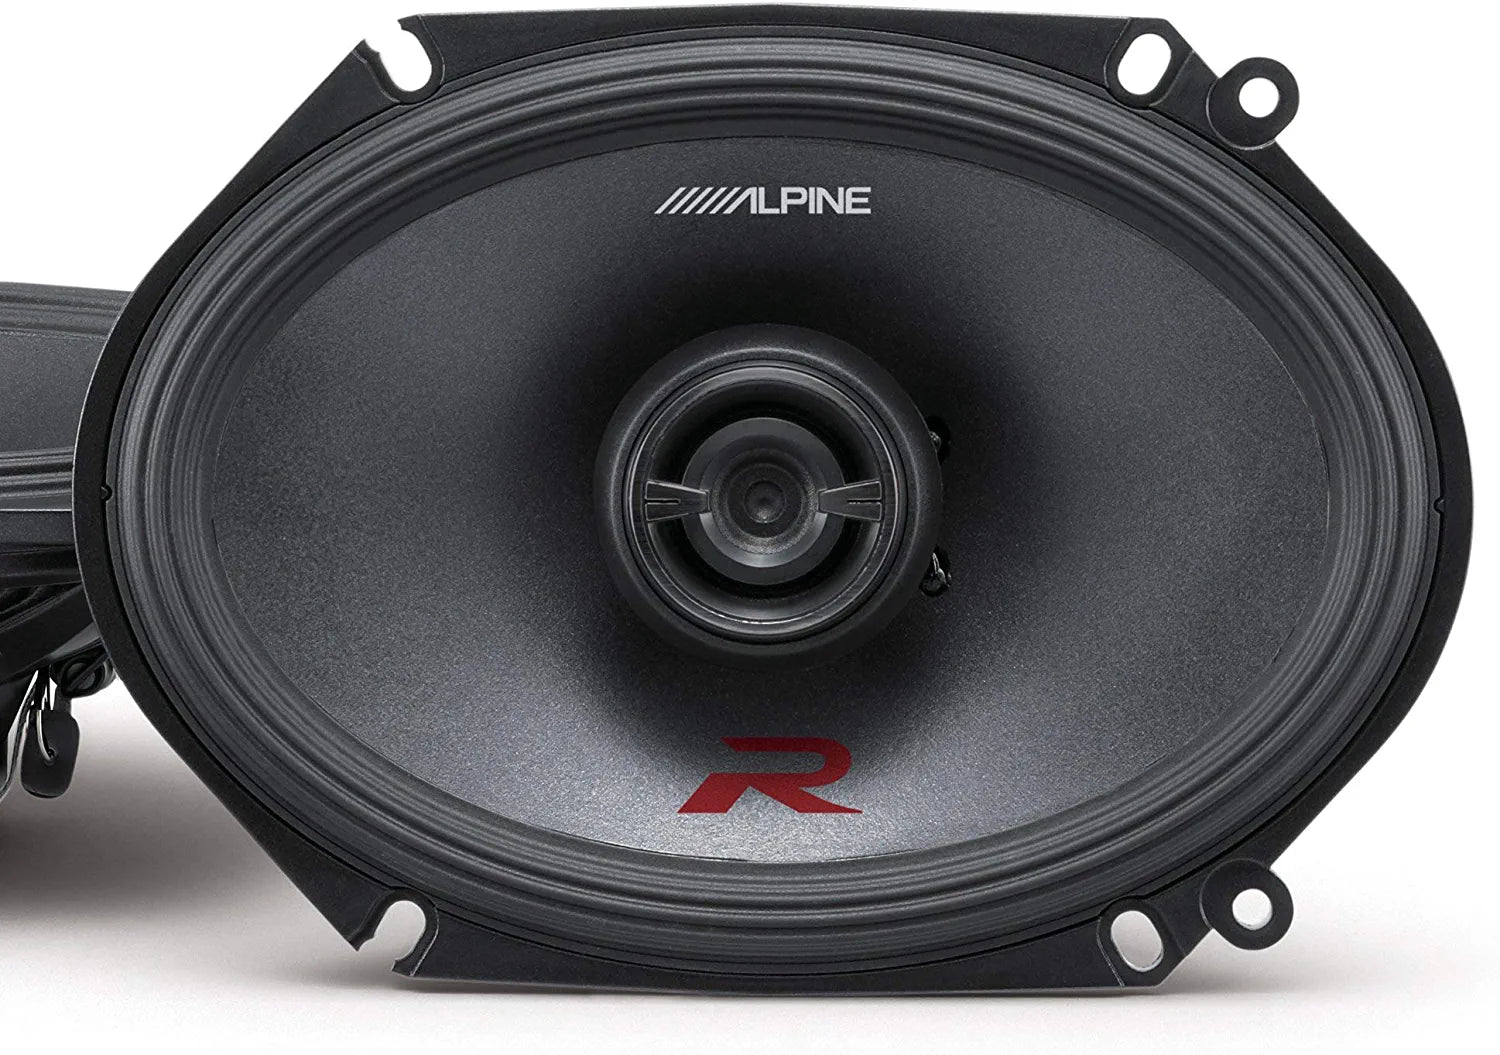 2 Pair Alpine R-S68 R-Series 6 x 8 Inch 300 Watt 2-Way Car Speakers